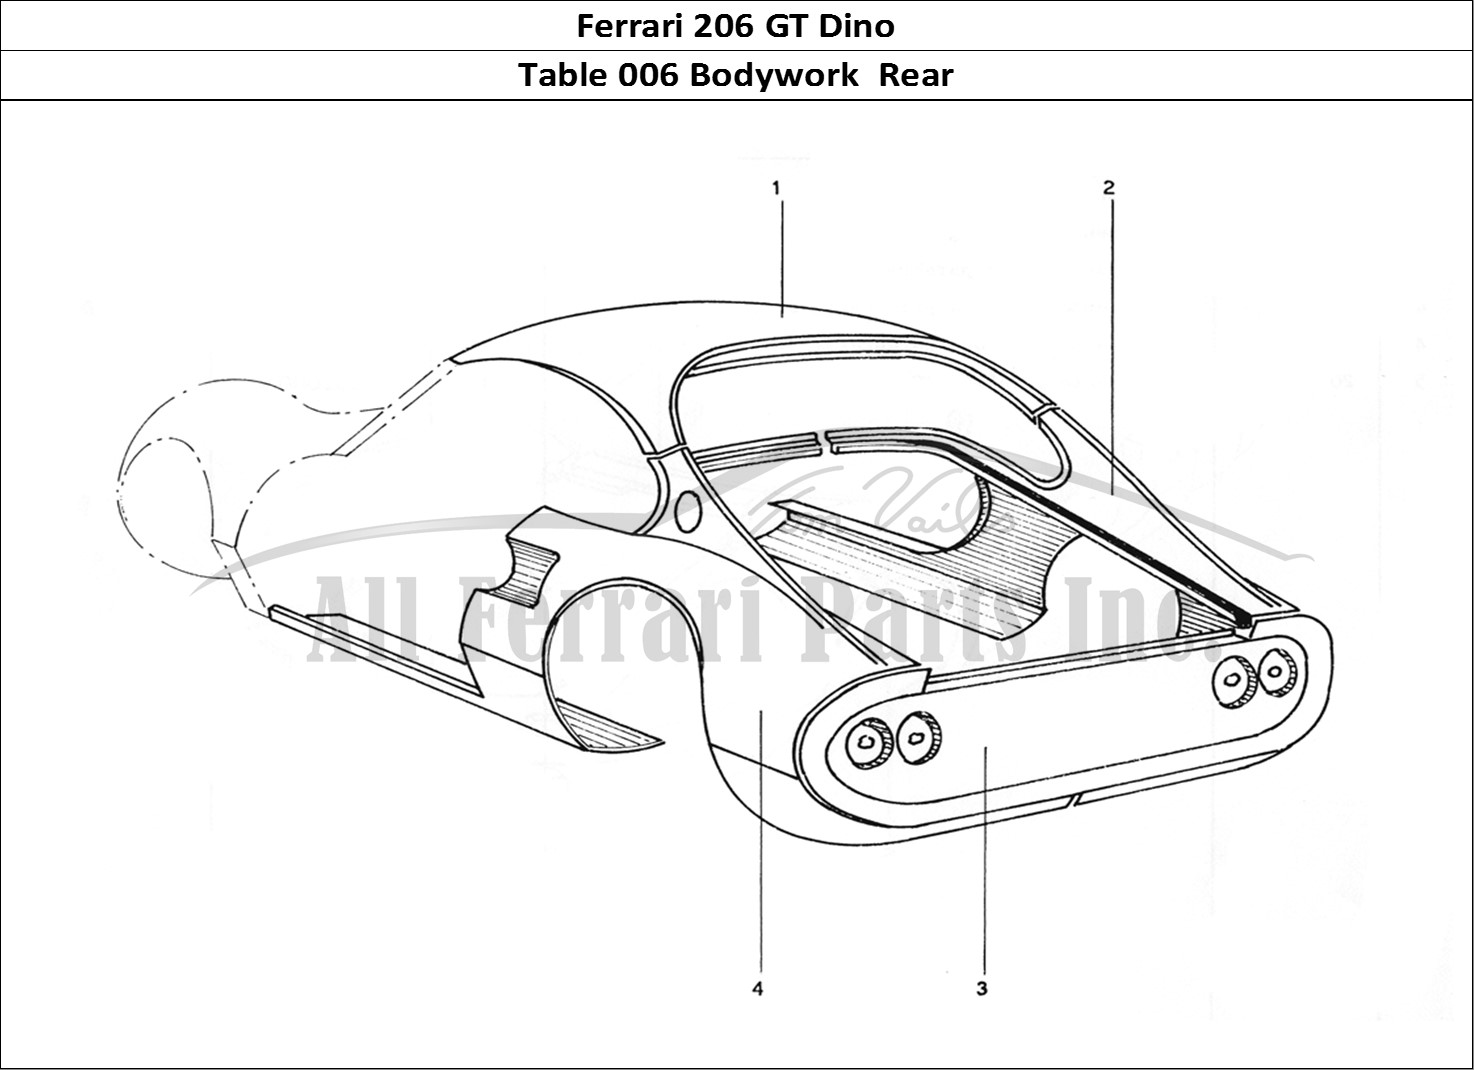 Ferrari Parts Ferrari 206 GT Dino (Coachwork) Page 006 Rear End Body Work